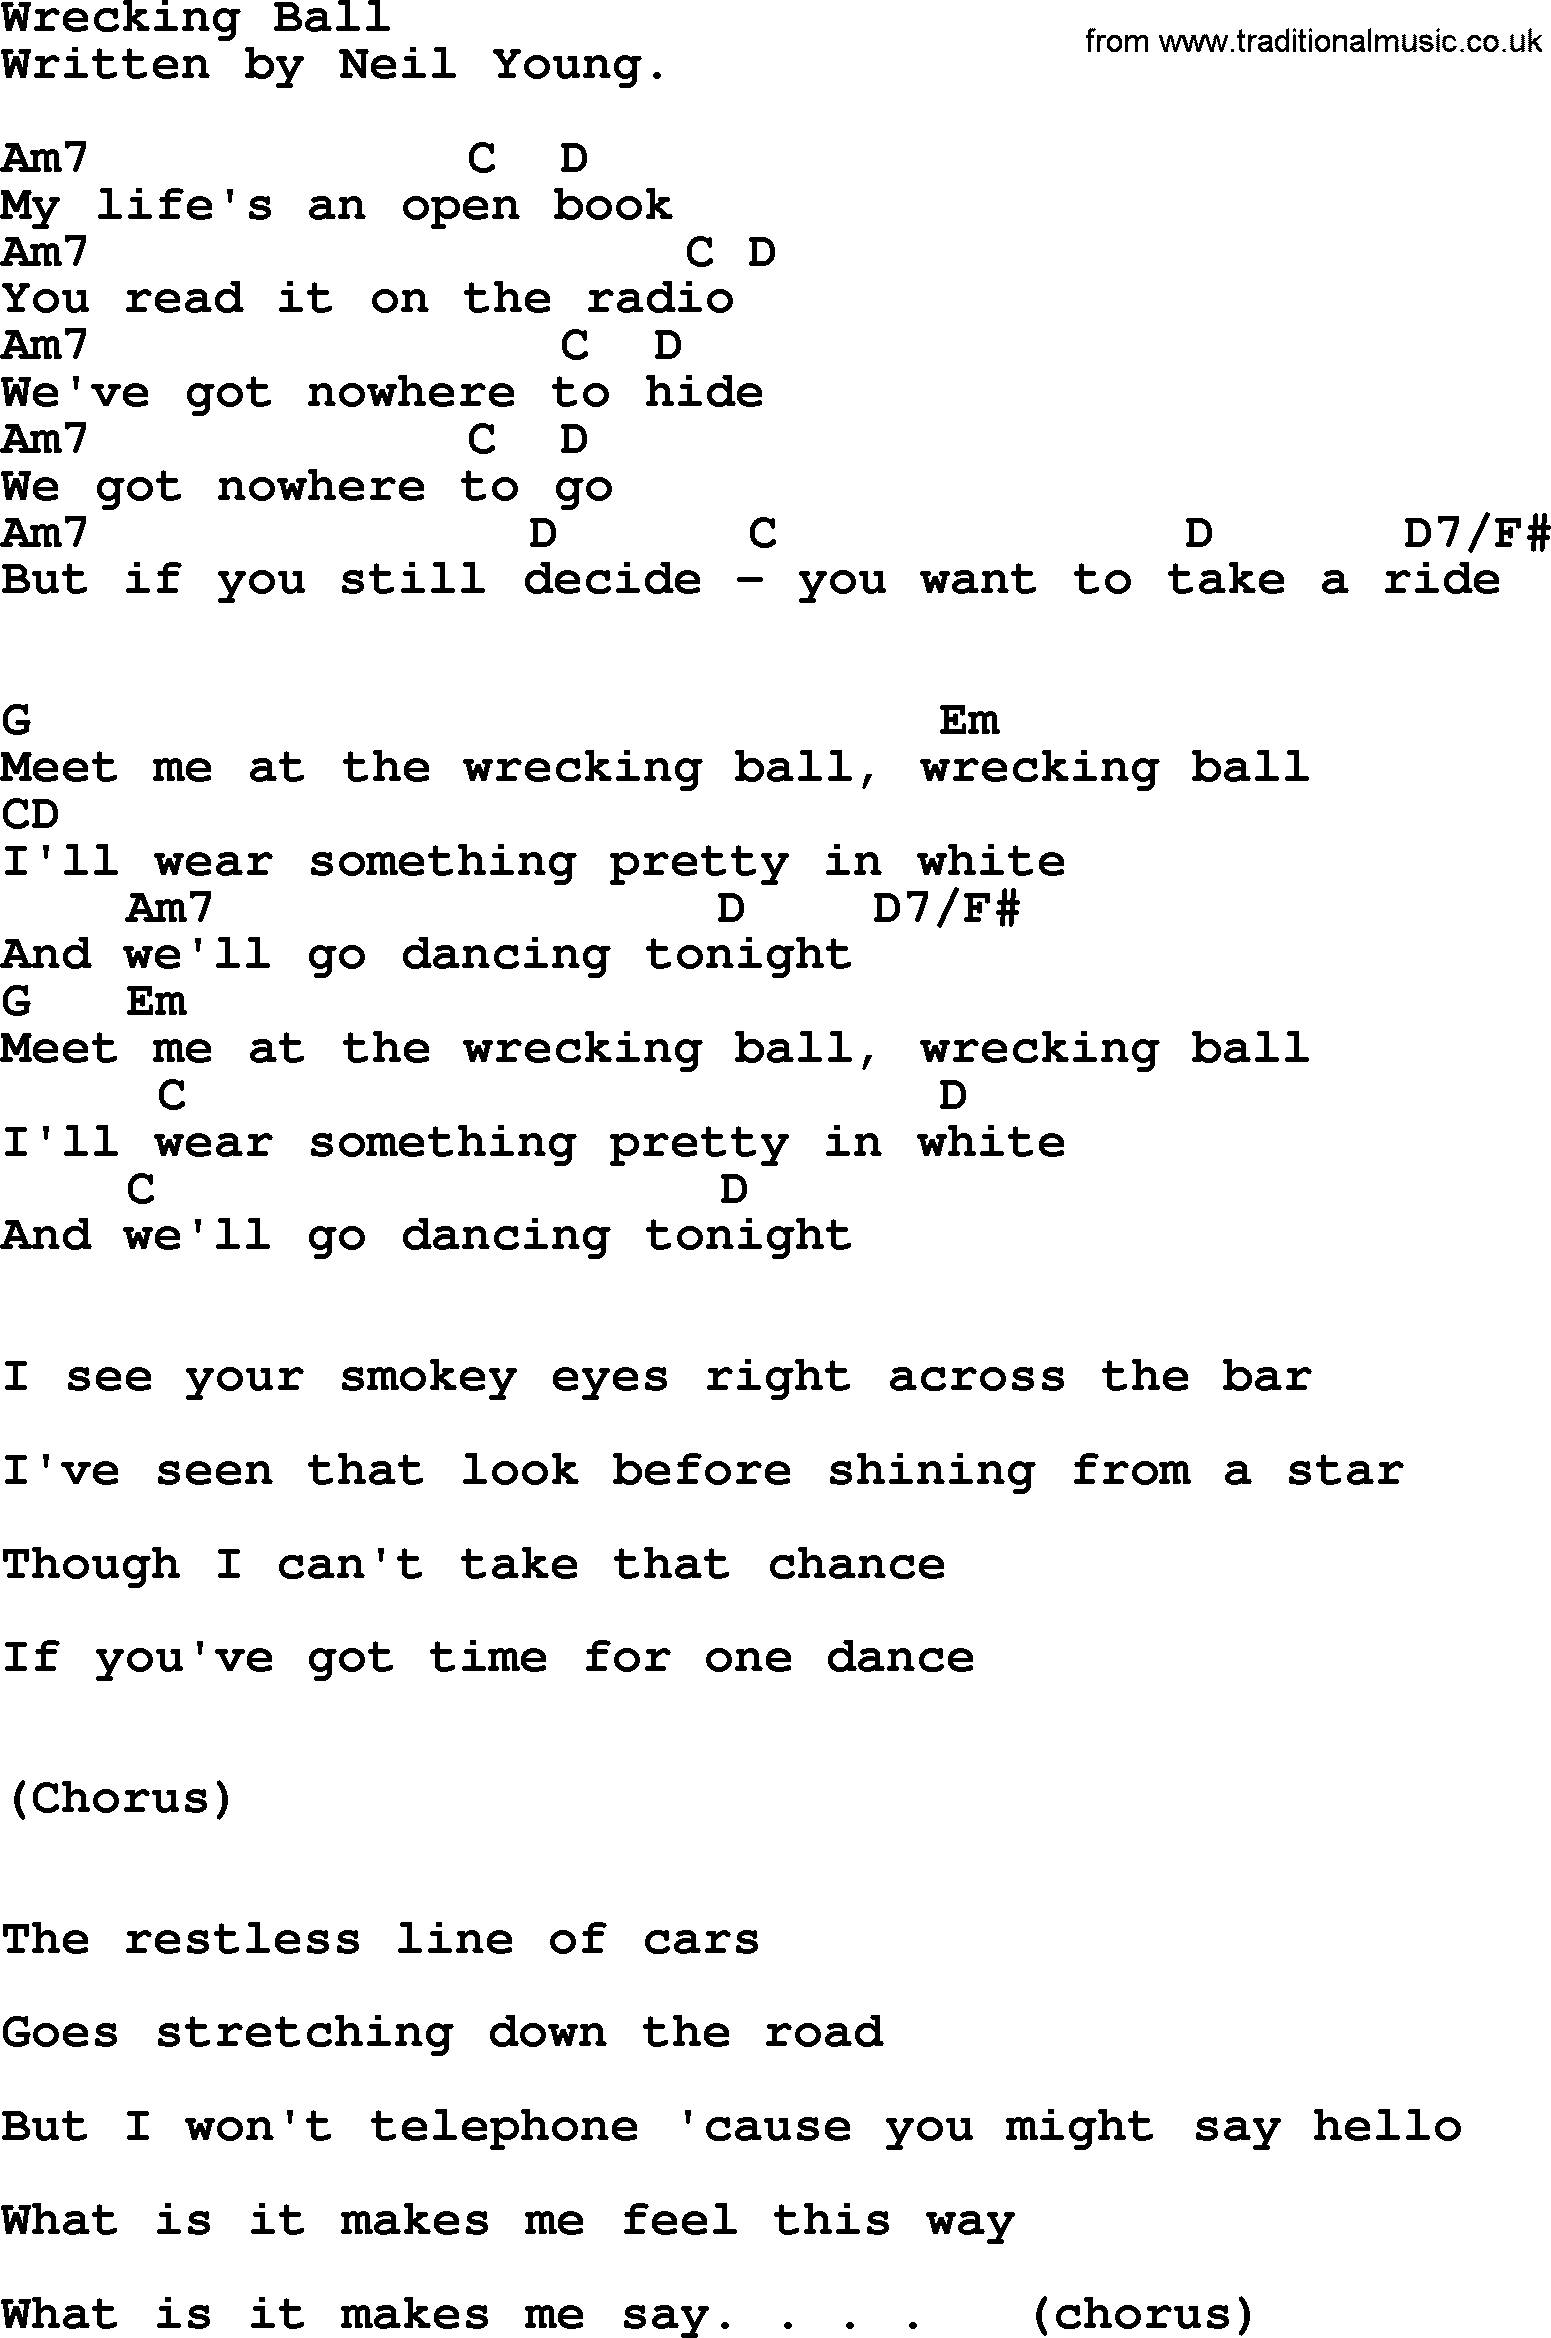 Emmylou Harris song: Wrecking Ball lyrics and chords